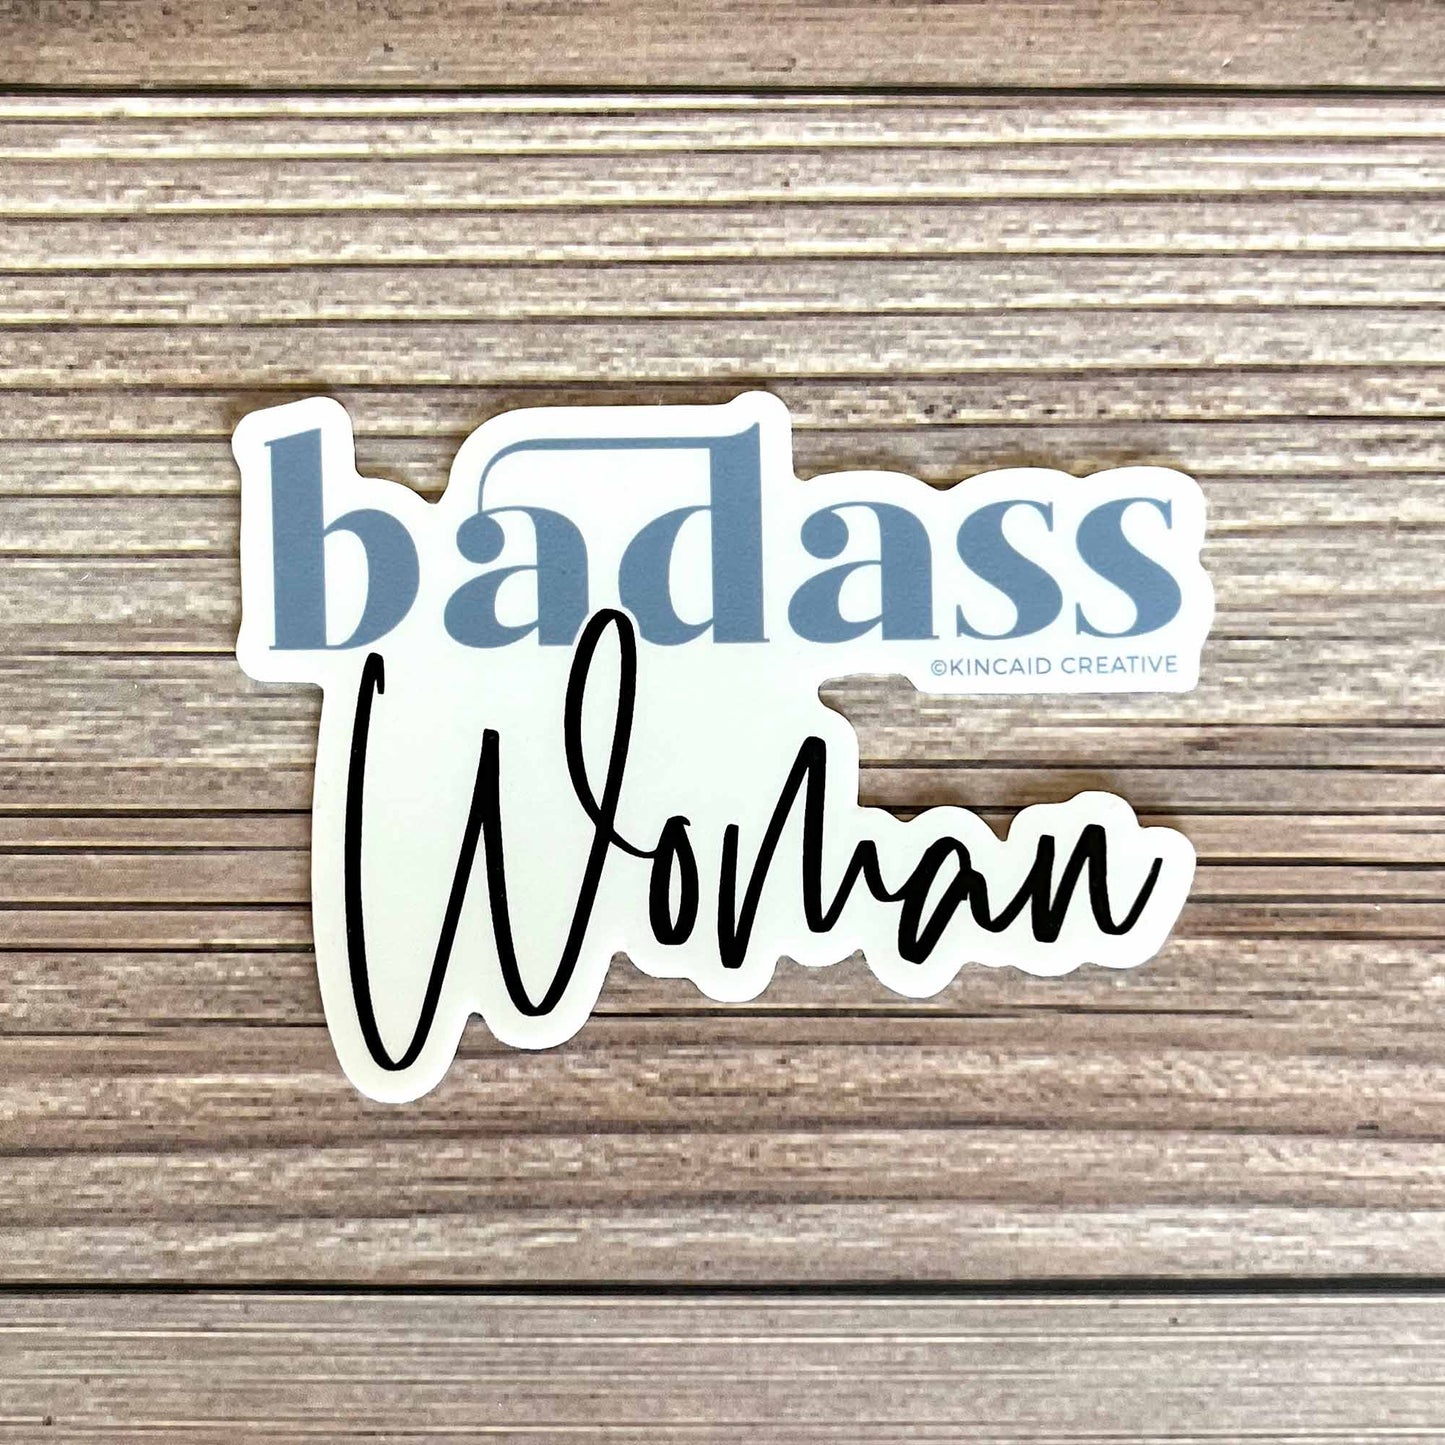 Badass Woman. Vinyl Sticker.